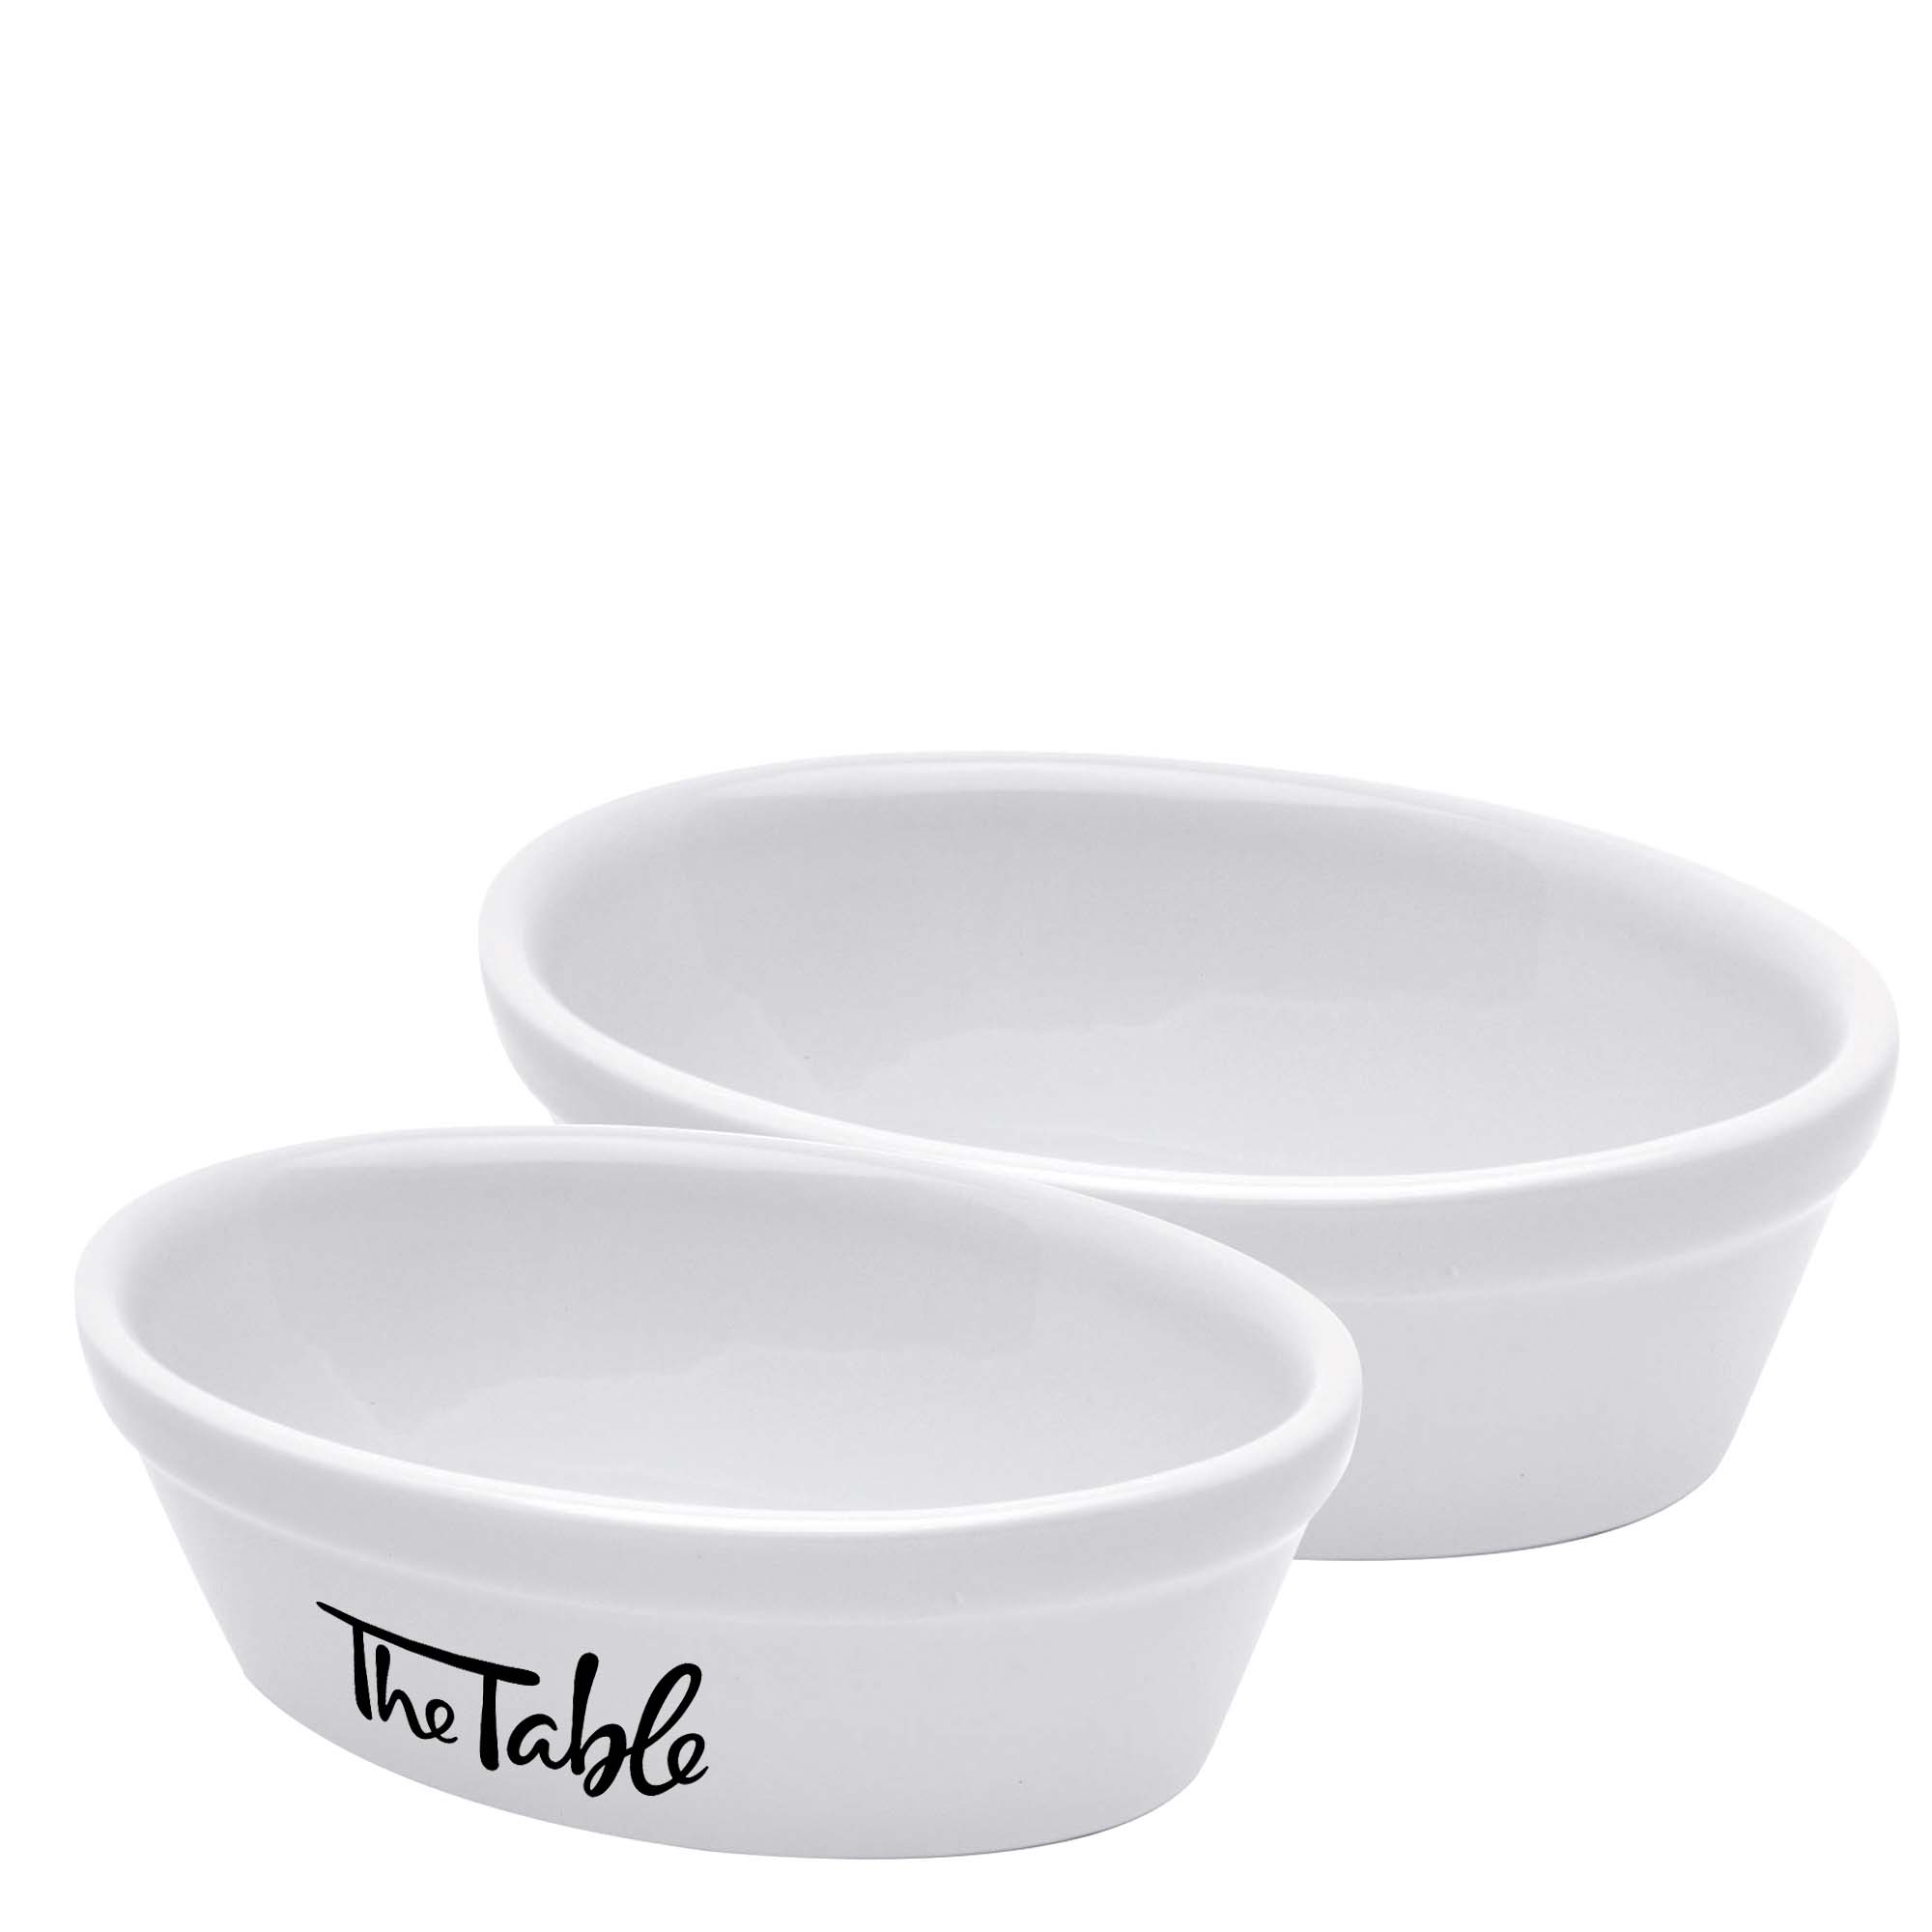 Ceramic Oval Pie Dishes